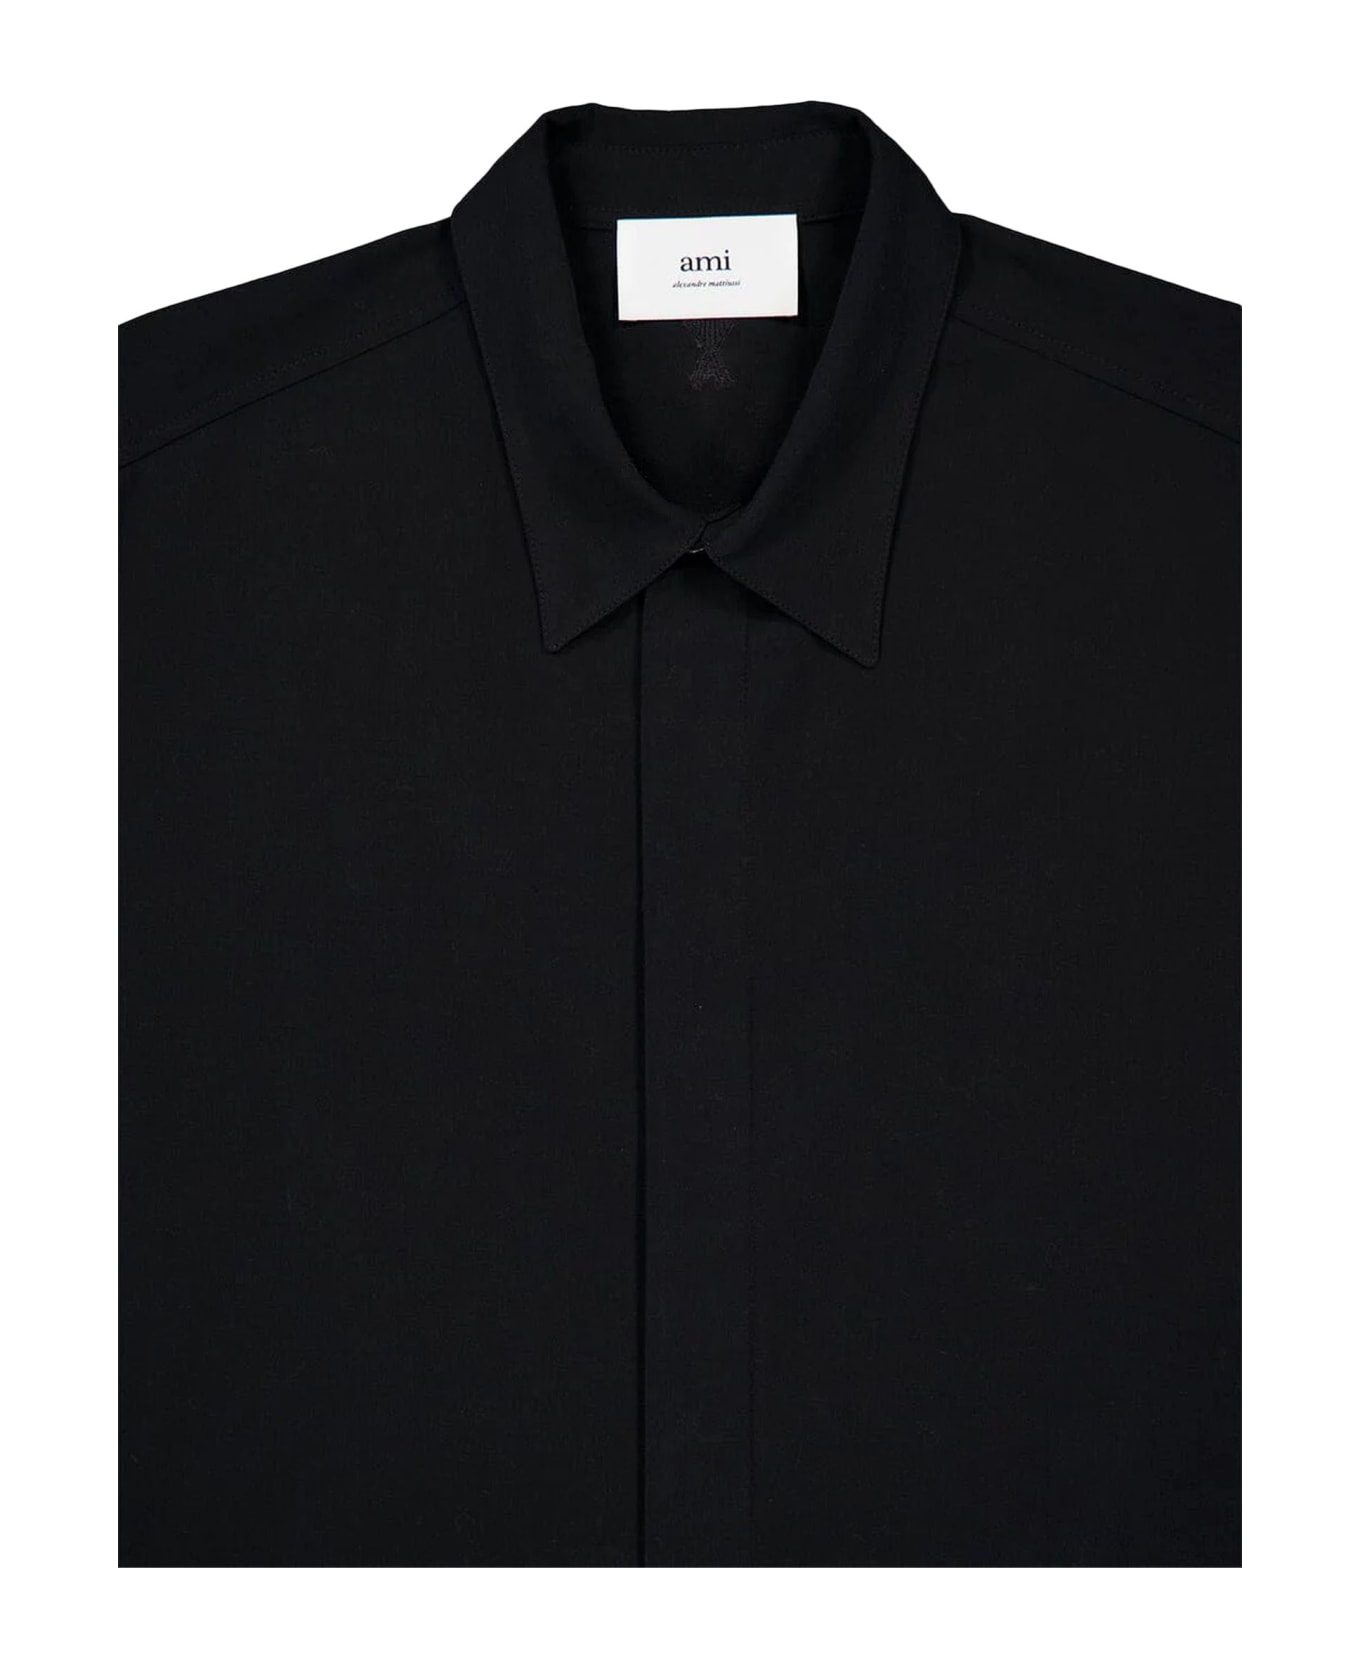 Ami Alexandre Mattiussi Ami Shirts Black - Black シャツ